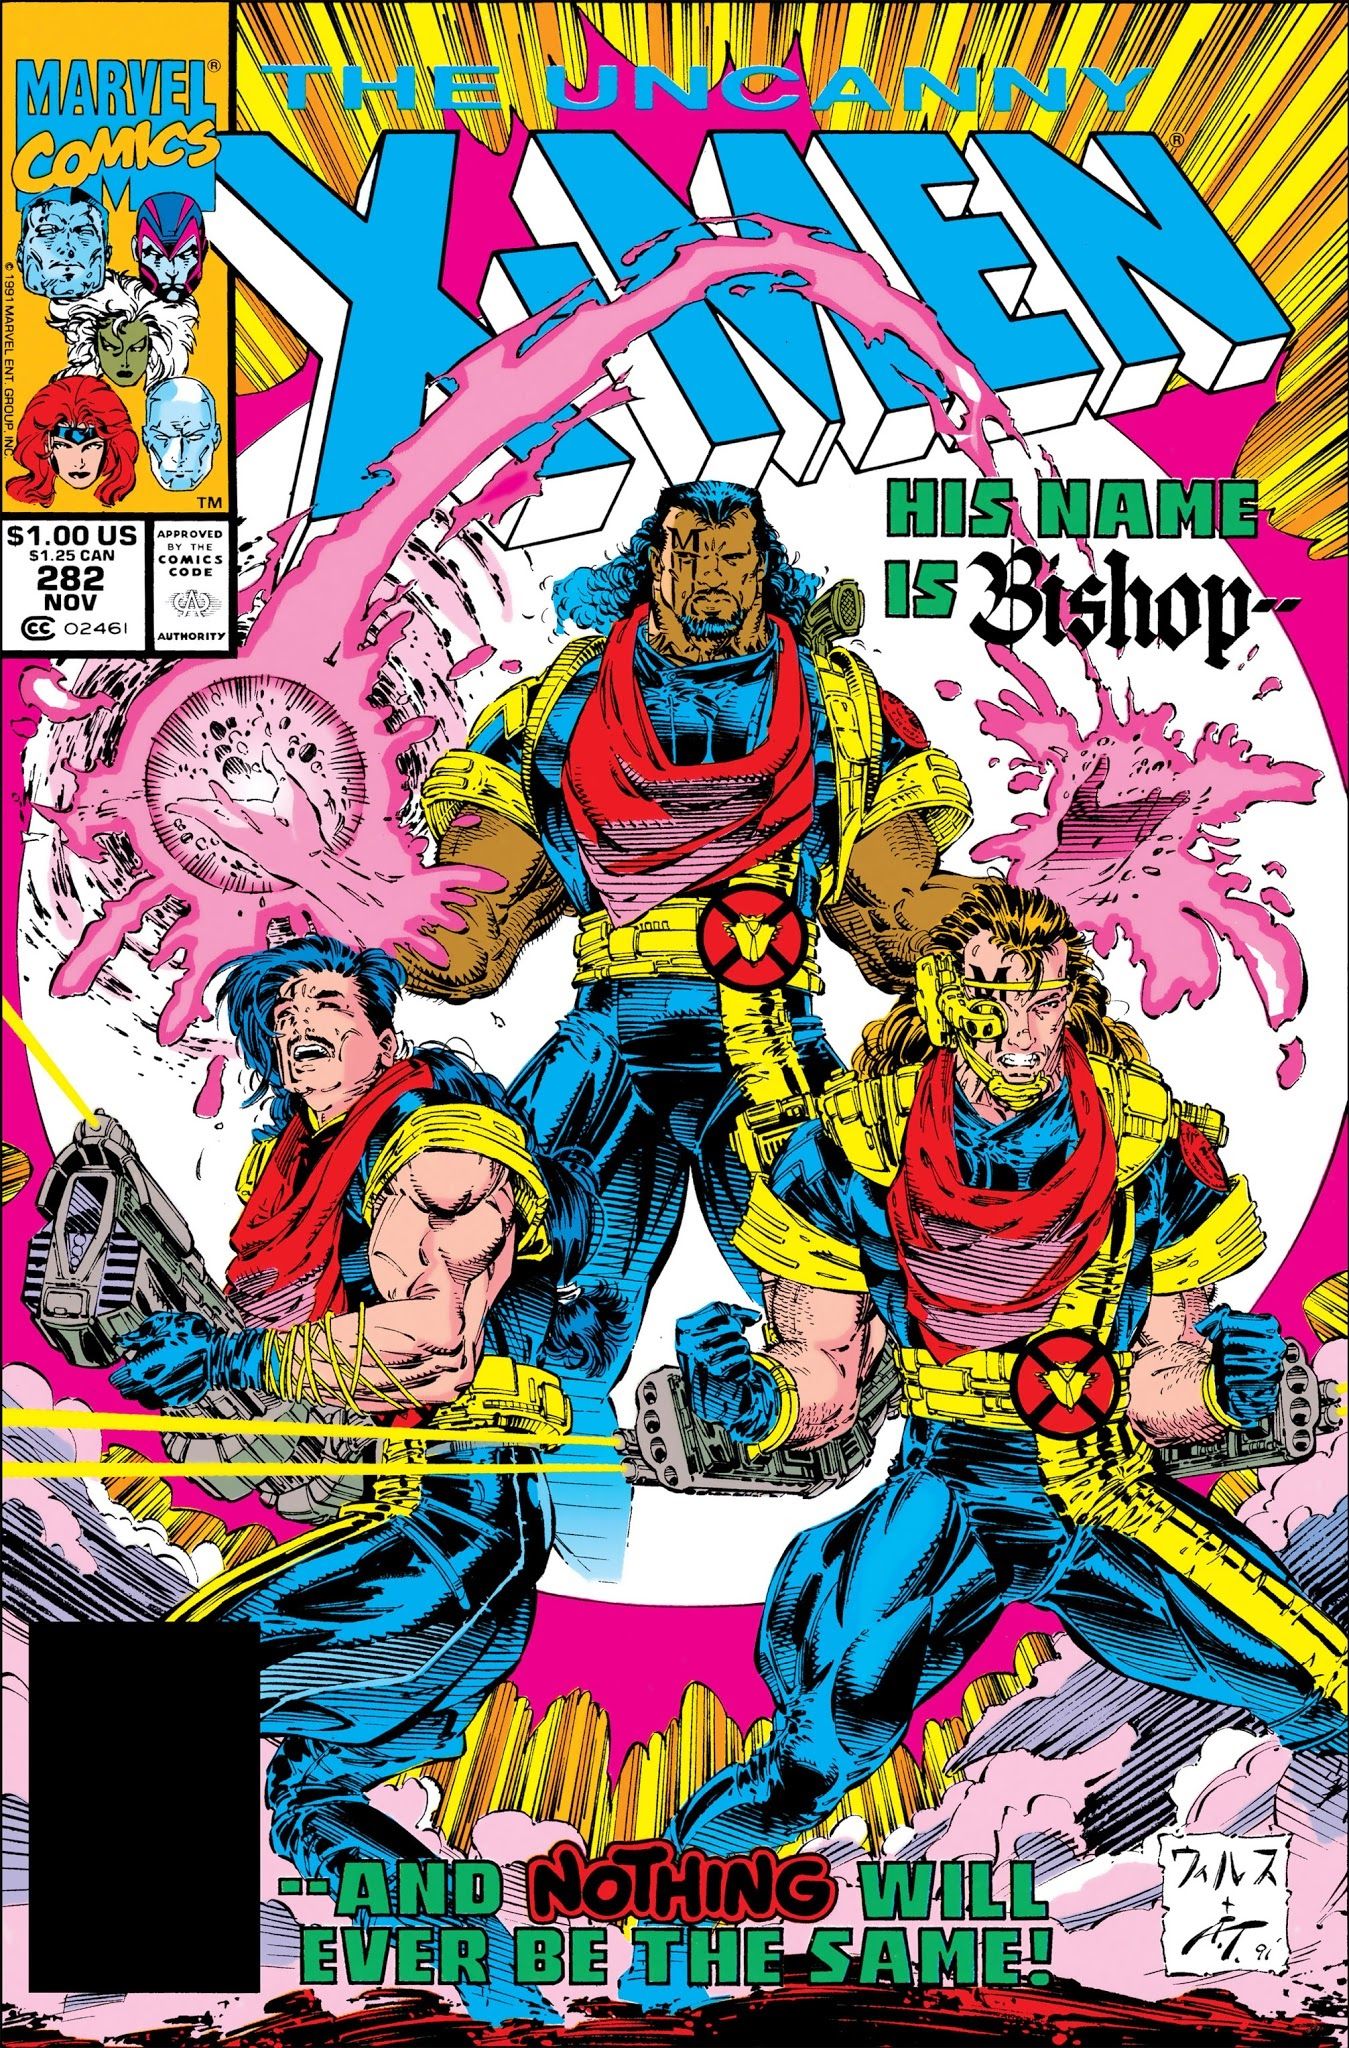 The cover of Uncanny X-Men #282